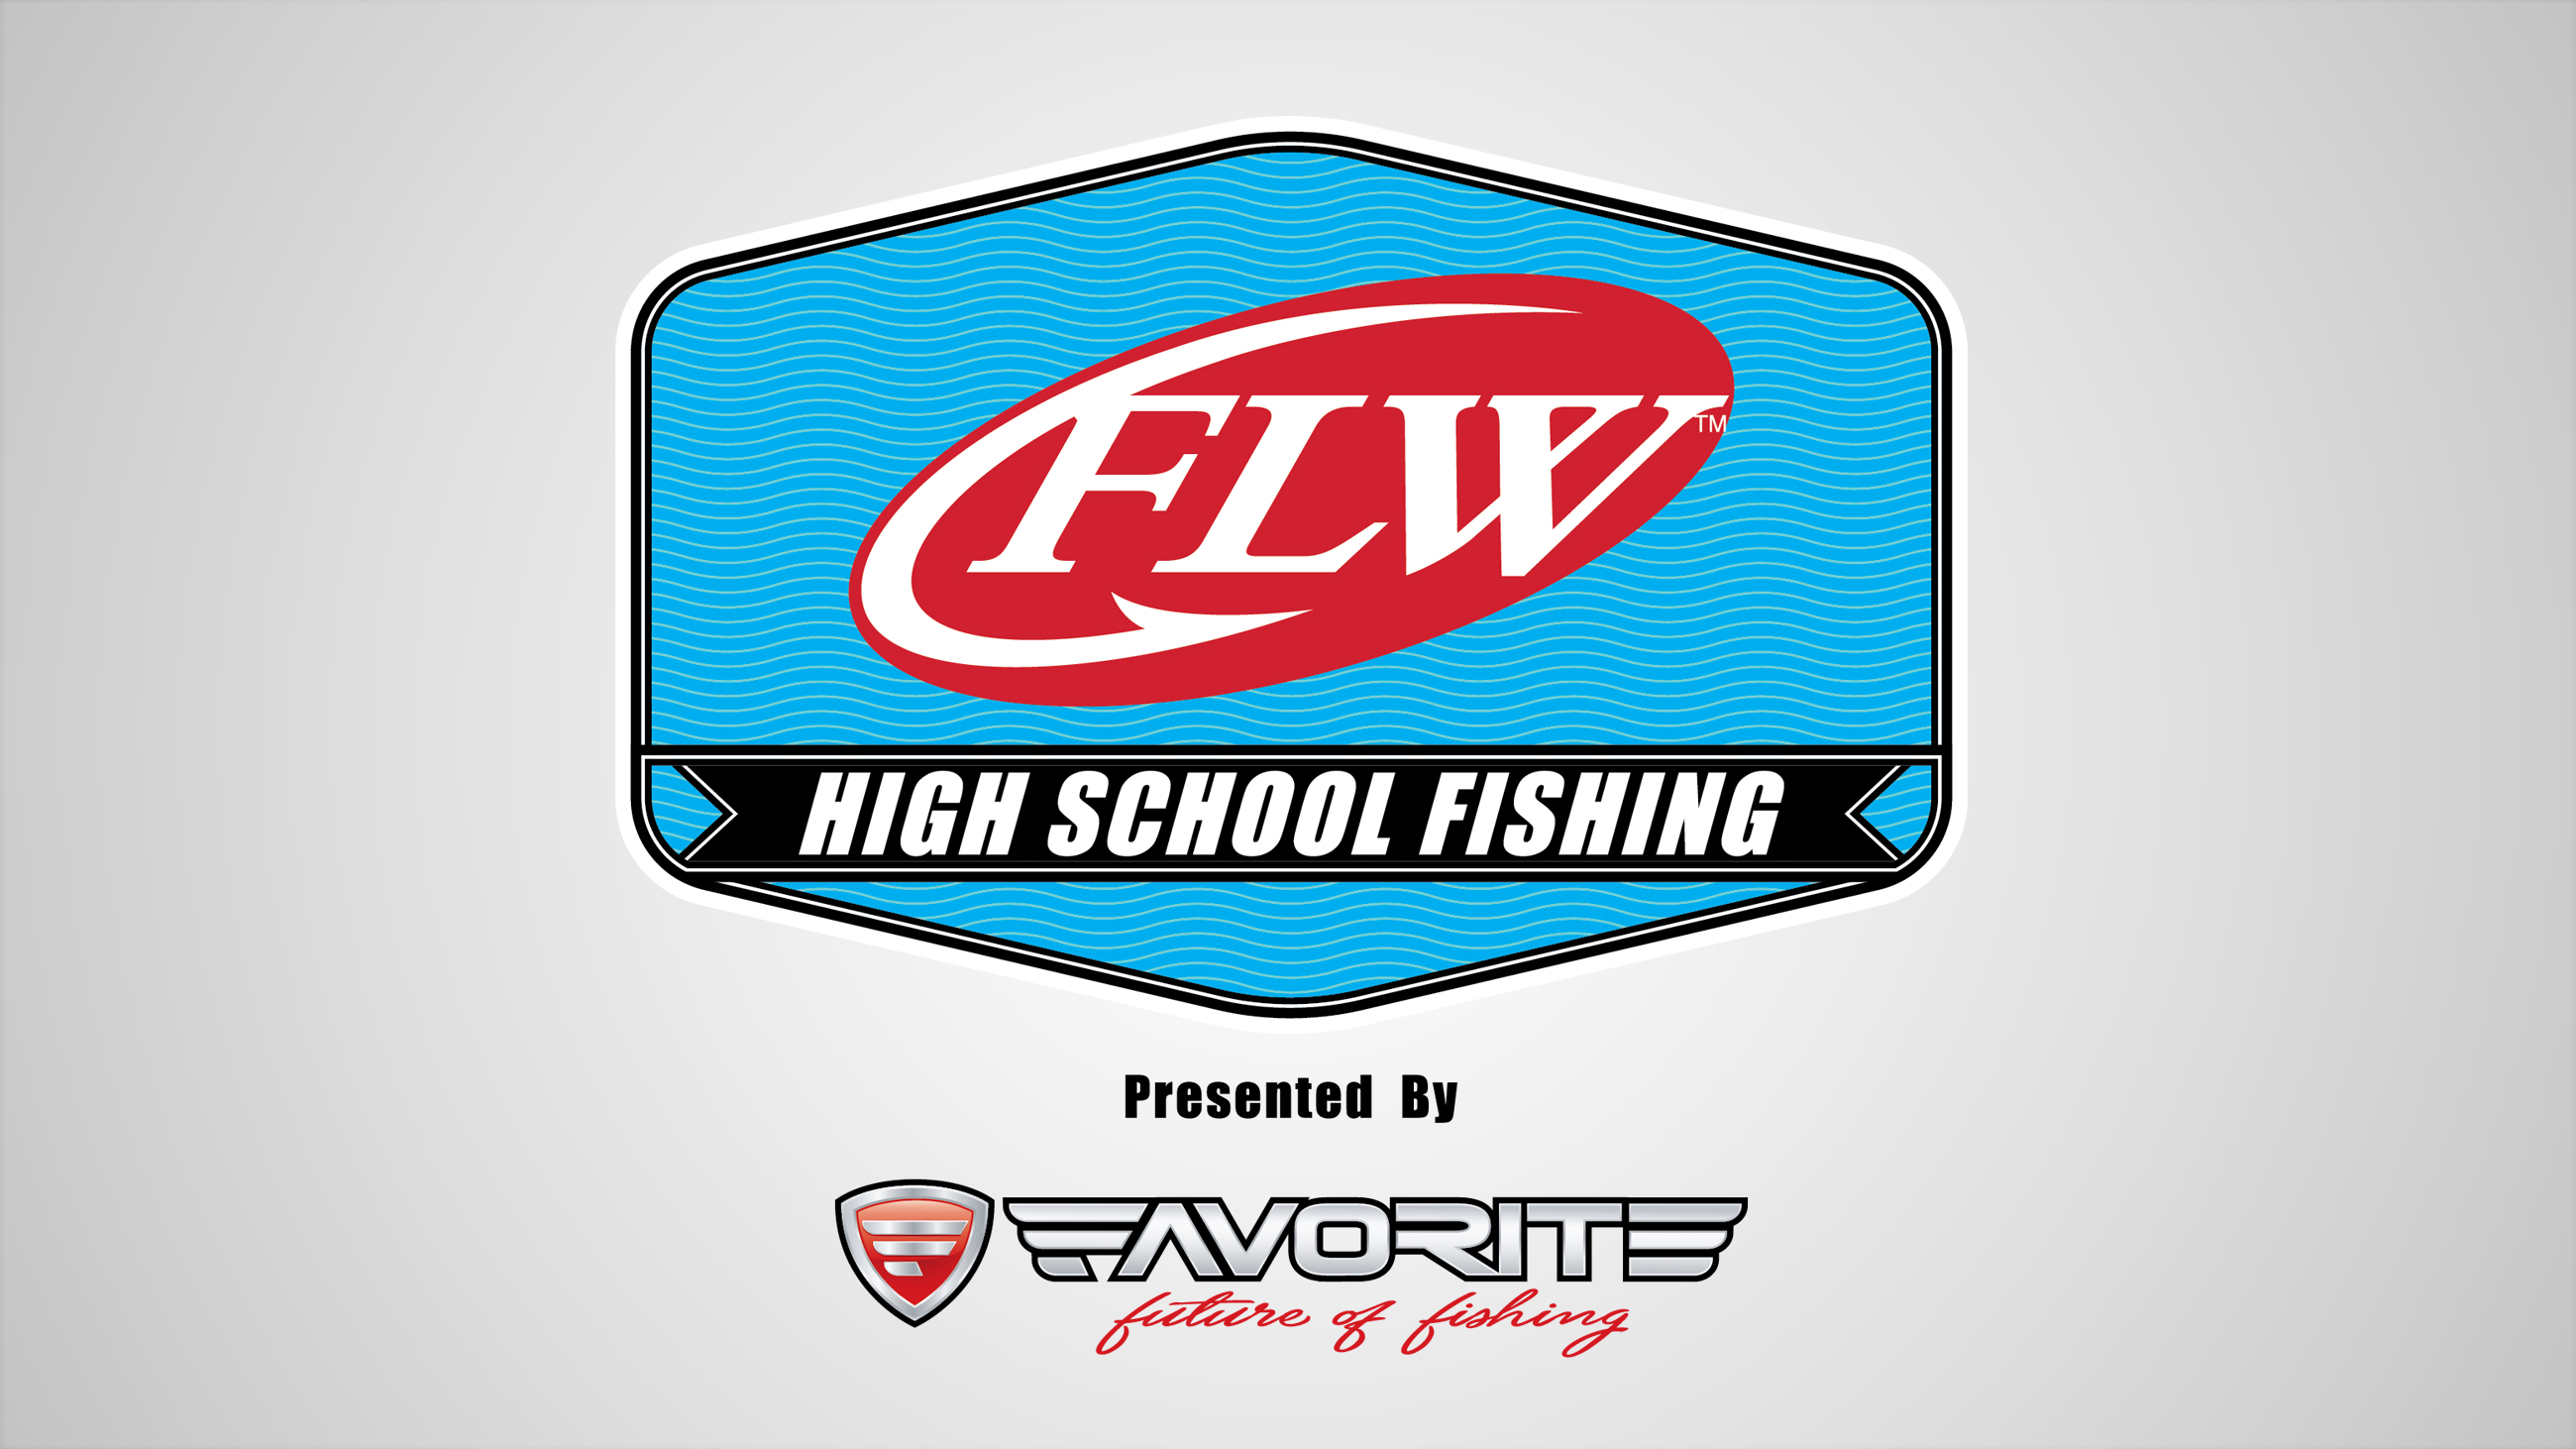 High School Championship Under Way at La Crosse - Major League Fishing